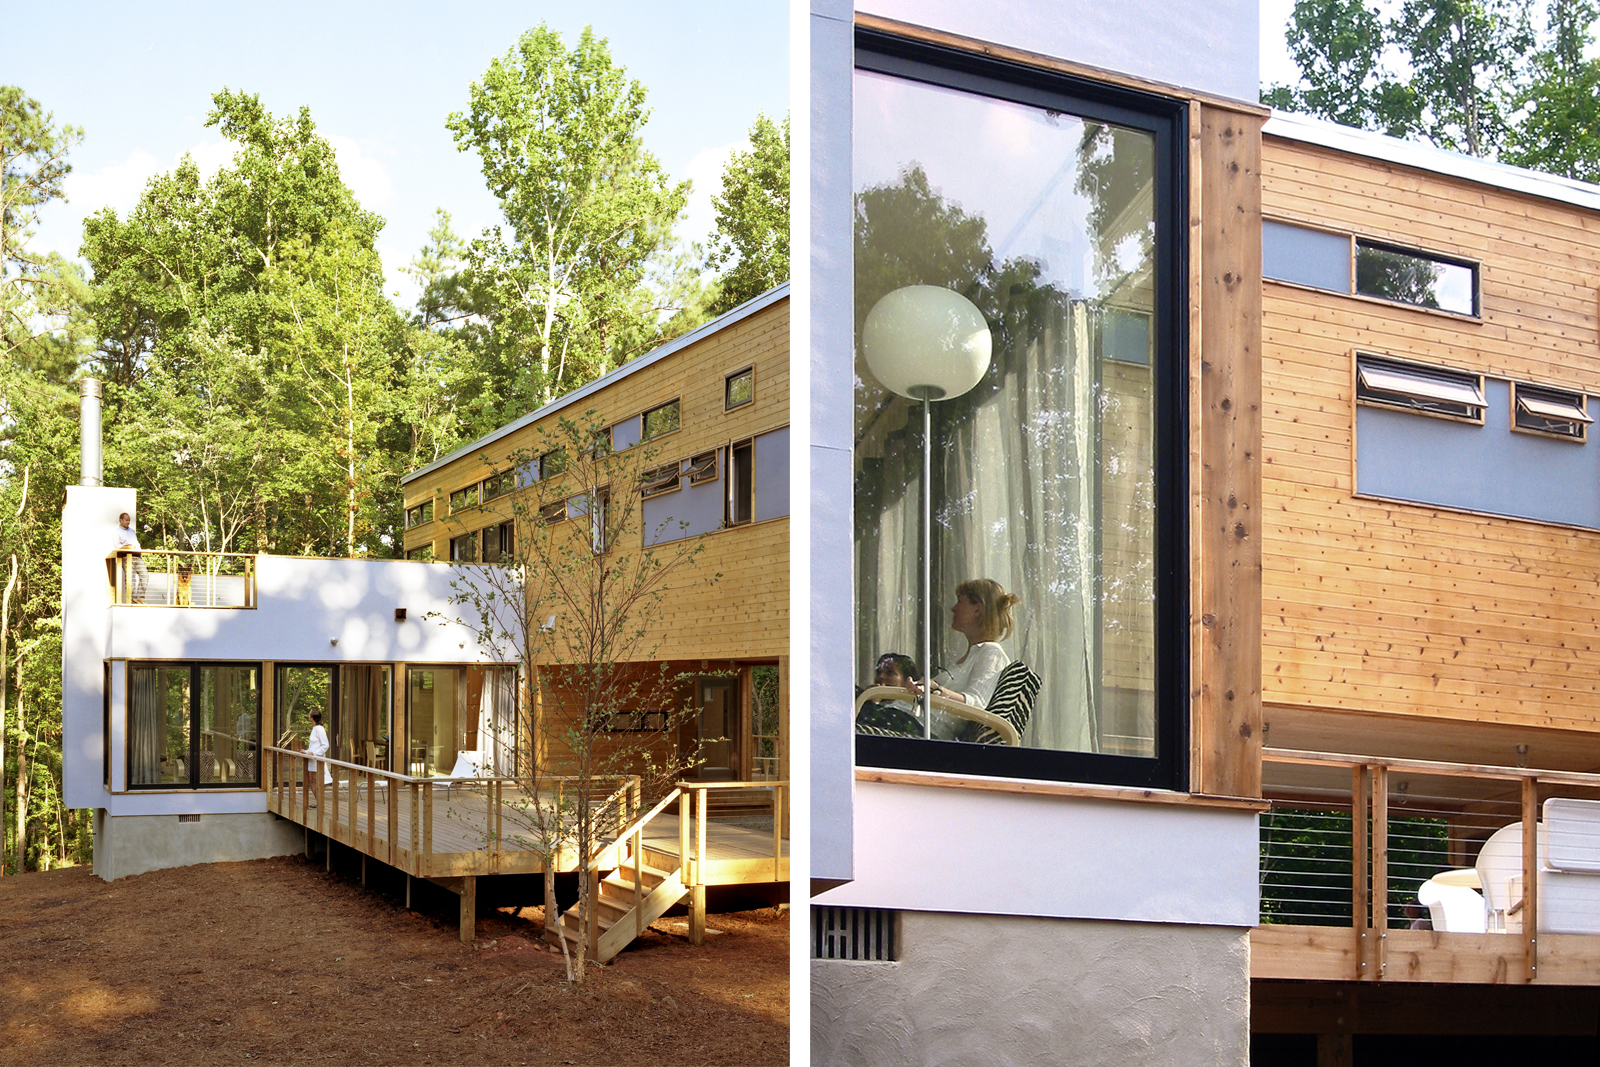 03-res4-resolution-4-architecture-modern-modular-house-prefab-dwell-home-exterior.jpg